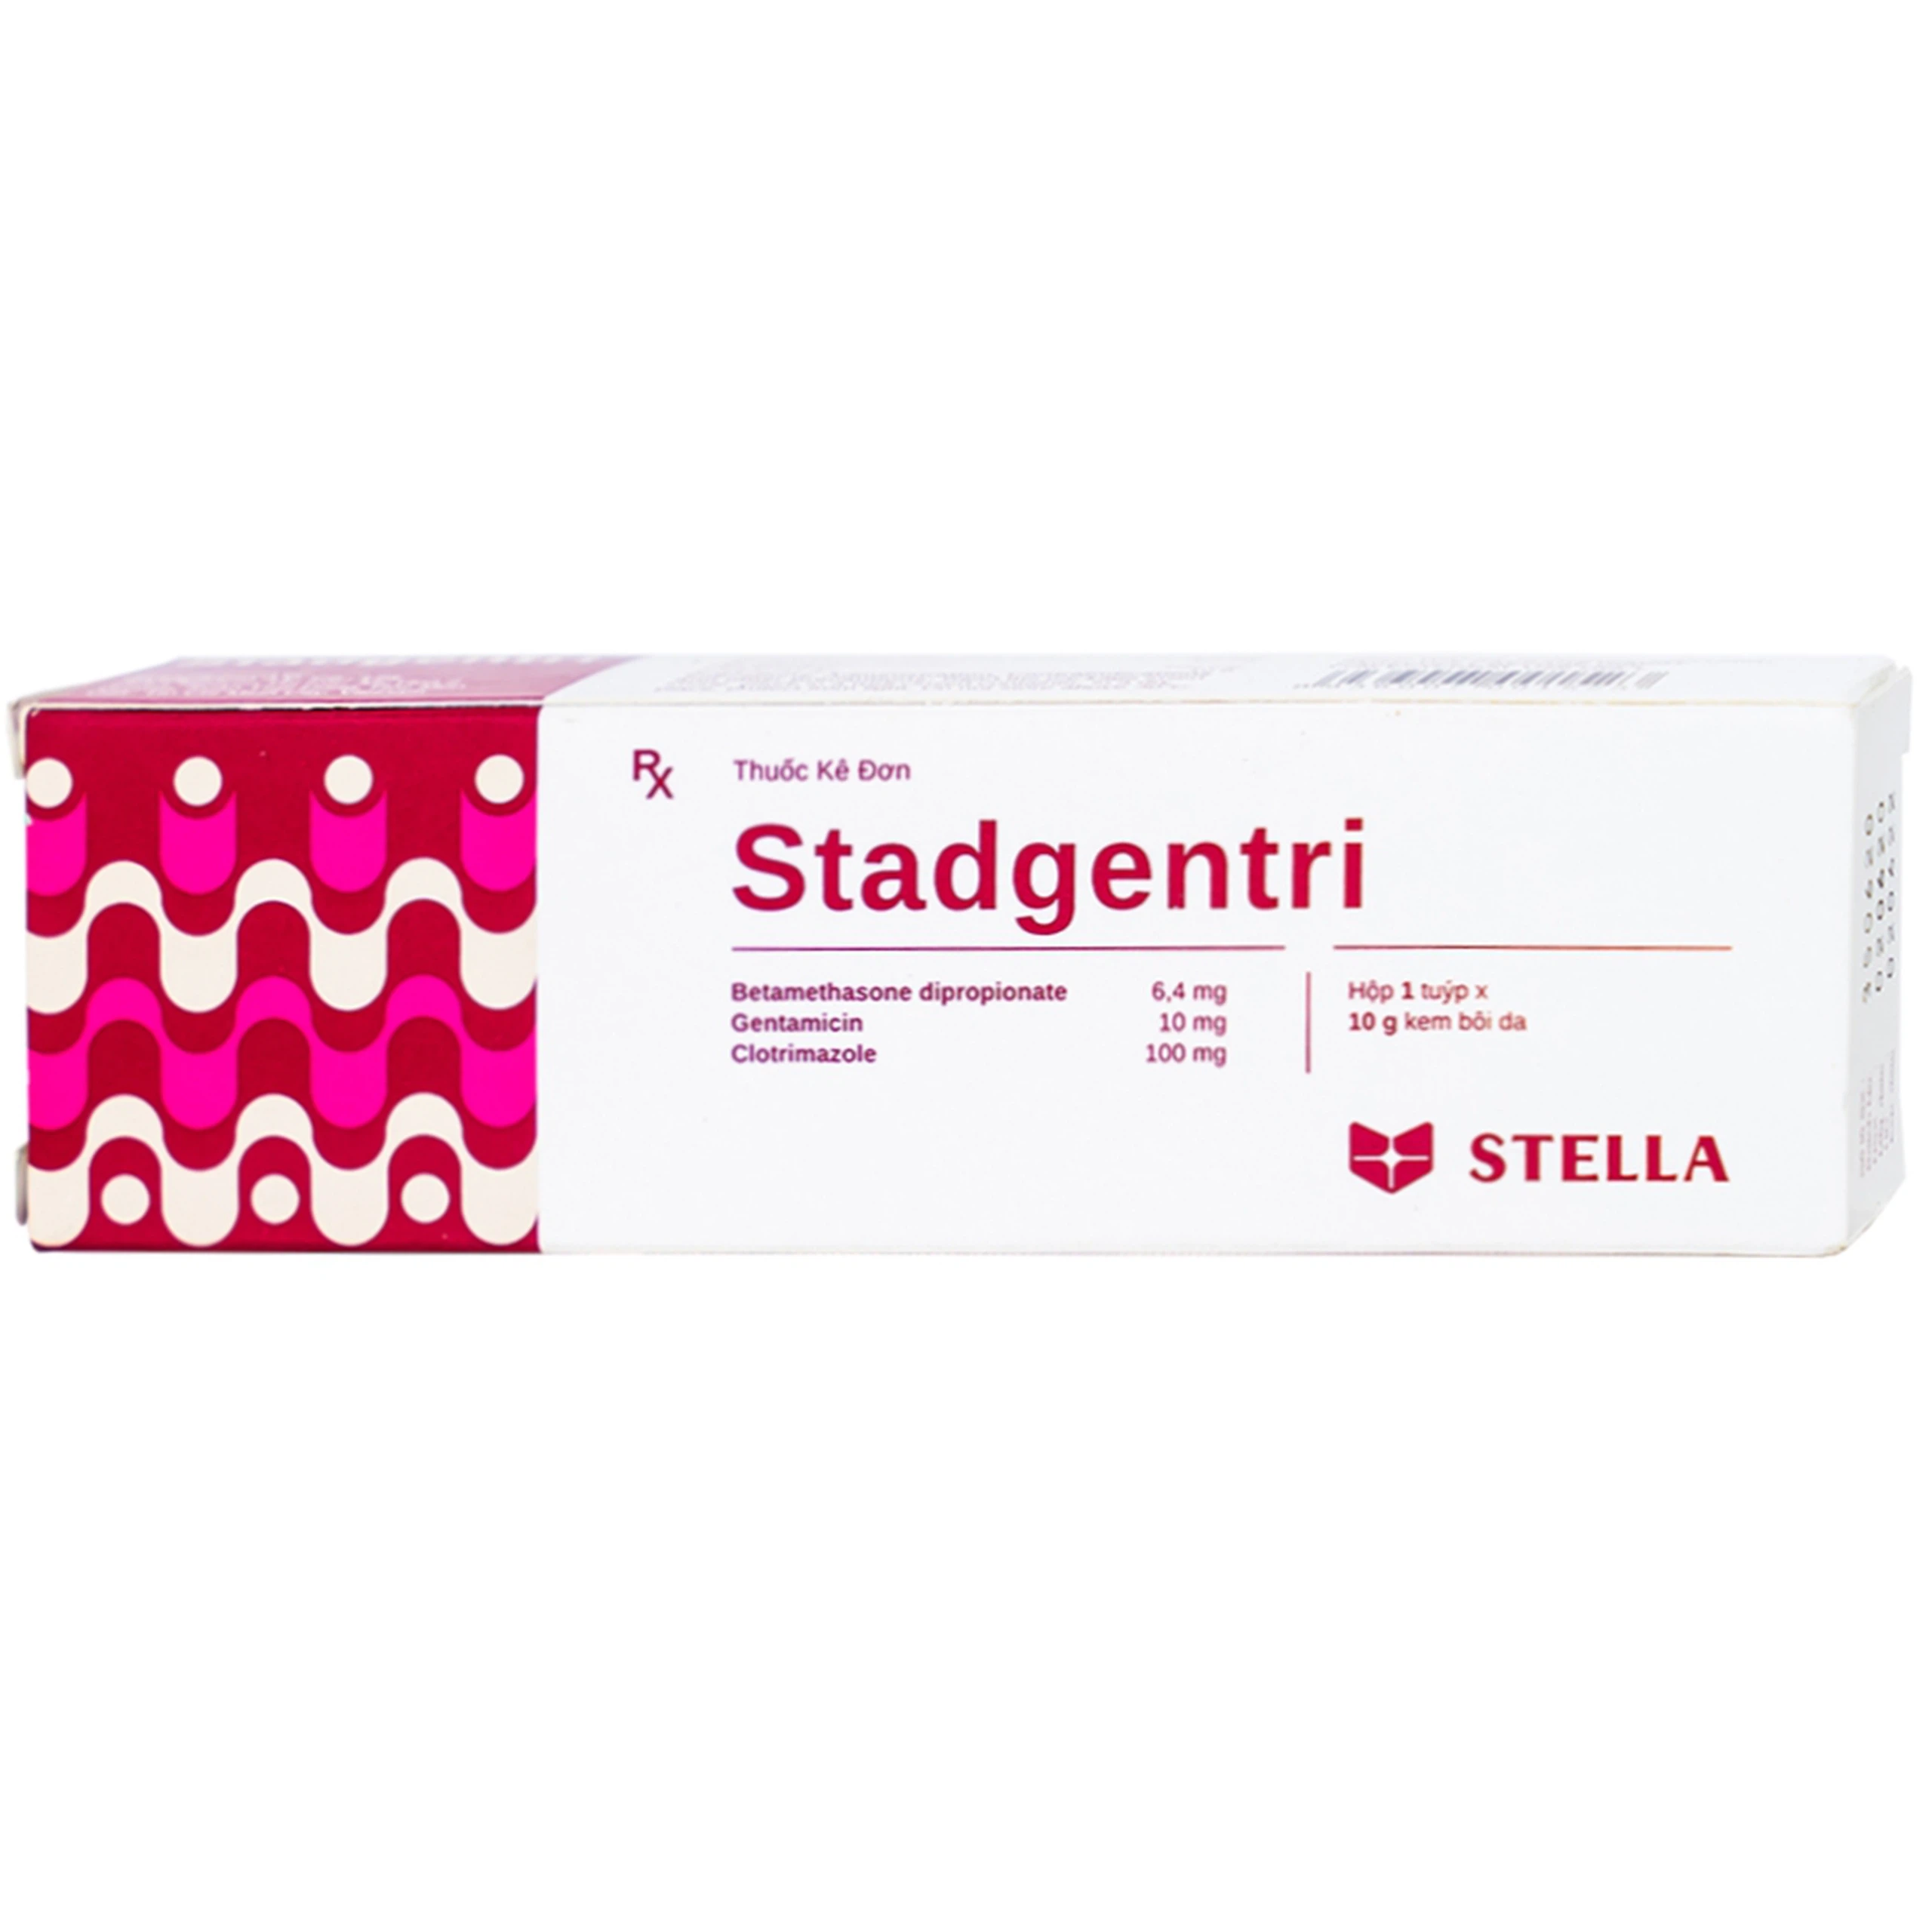 Kem bôi da Stadgentri Stella điều trị các bệnh về da (10g)